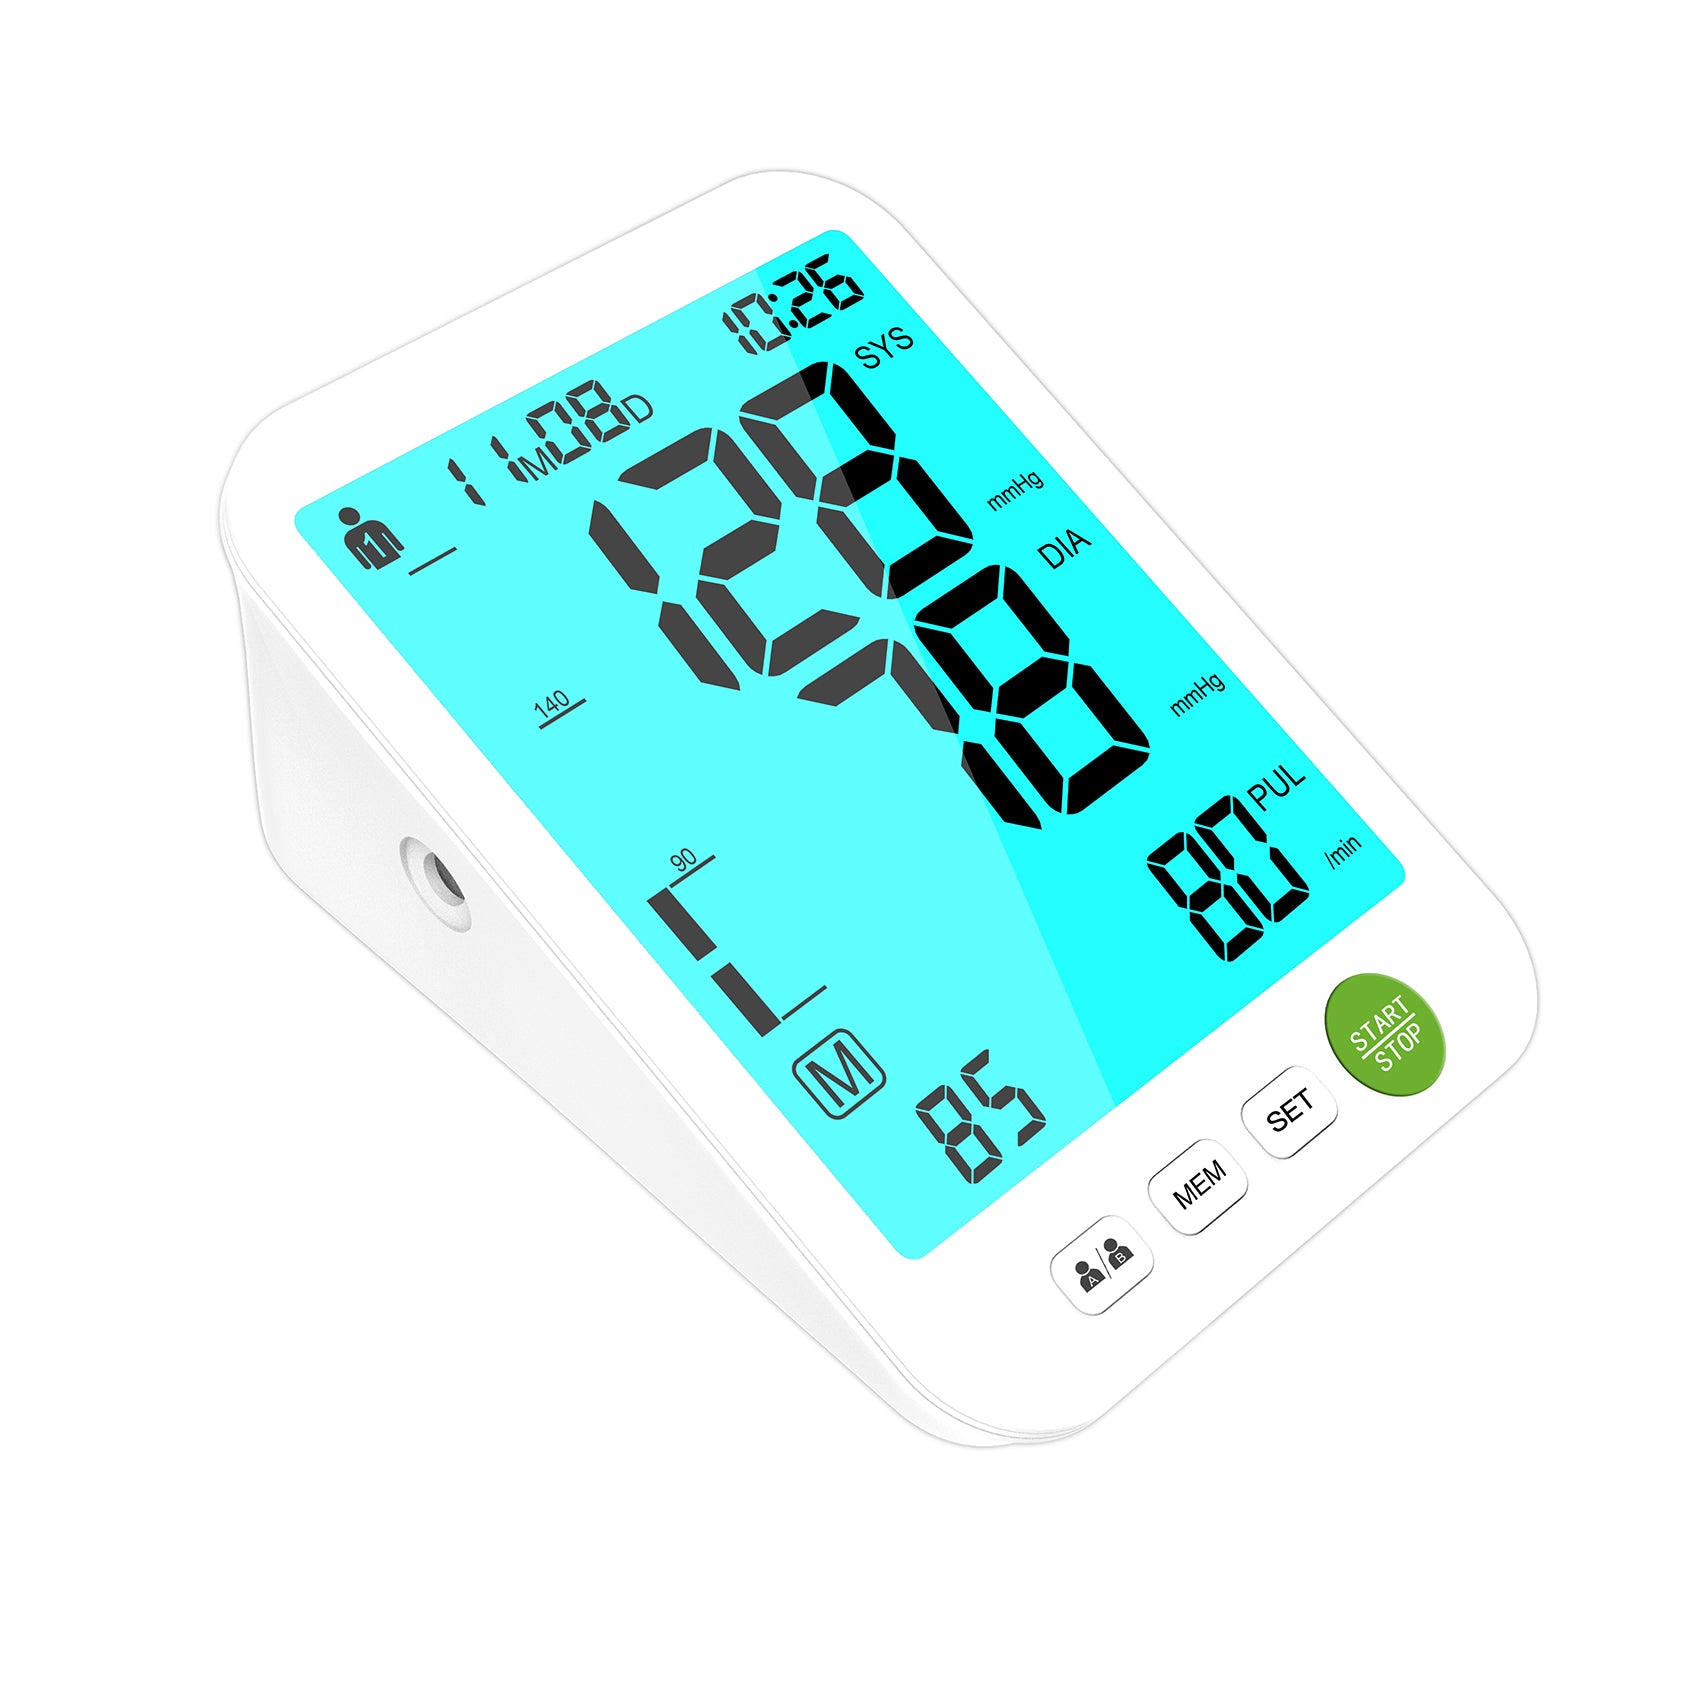 Konsung SmileCare Upper Arm Electronic Blood Pressure Monitor Digital LCD Pulse Tonometer Cuff Meter Monitor BP Sphygmomanometer - Powered by www.SmileCareHealth.com